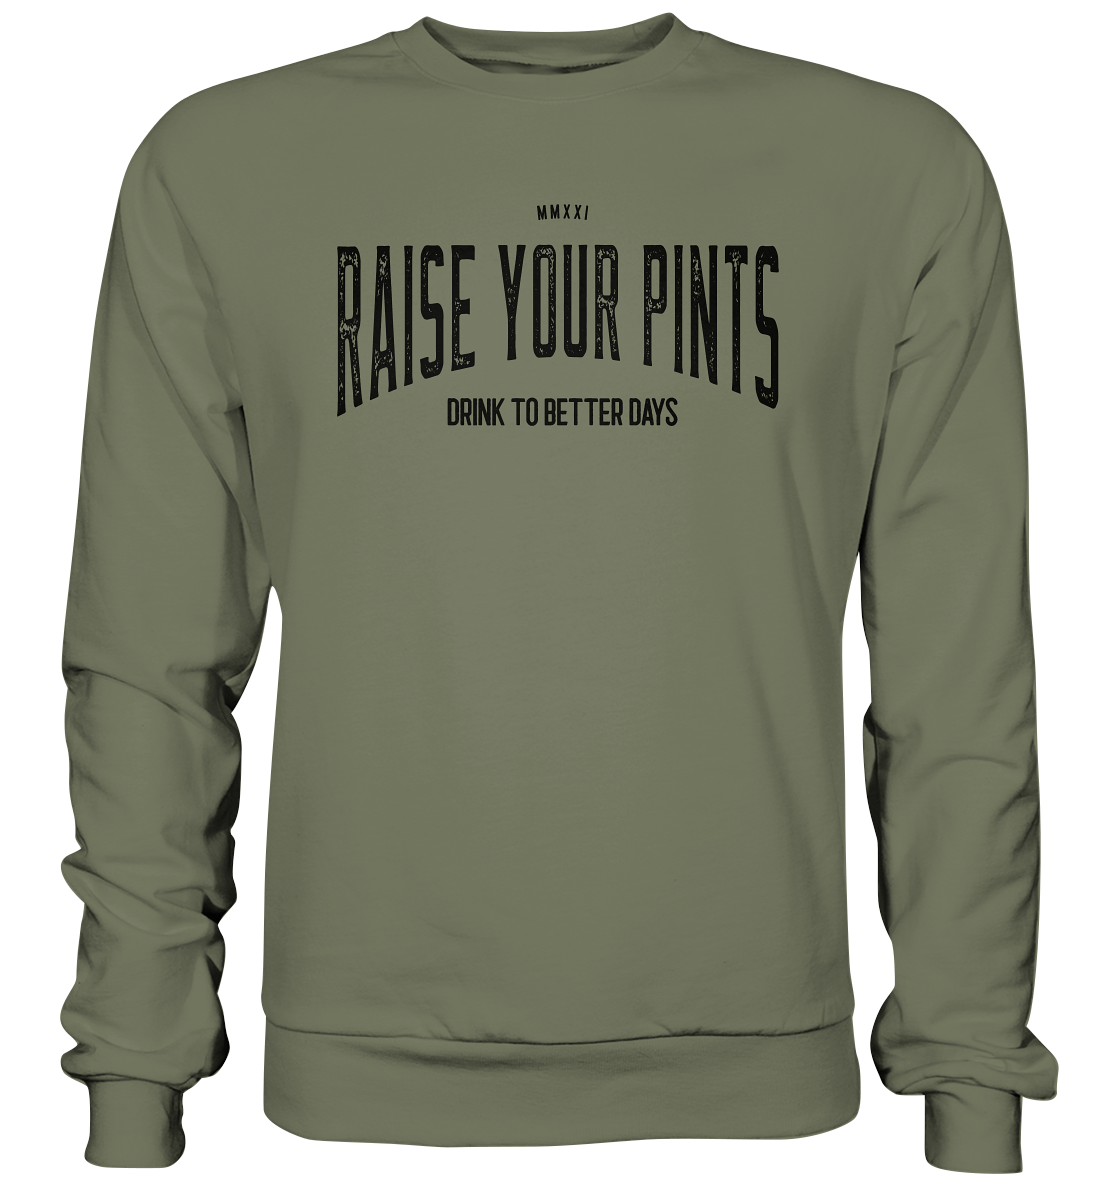 Raise Your Pints "Drink To Better Days" - Premium Sweatshirt